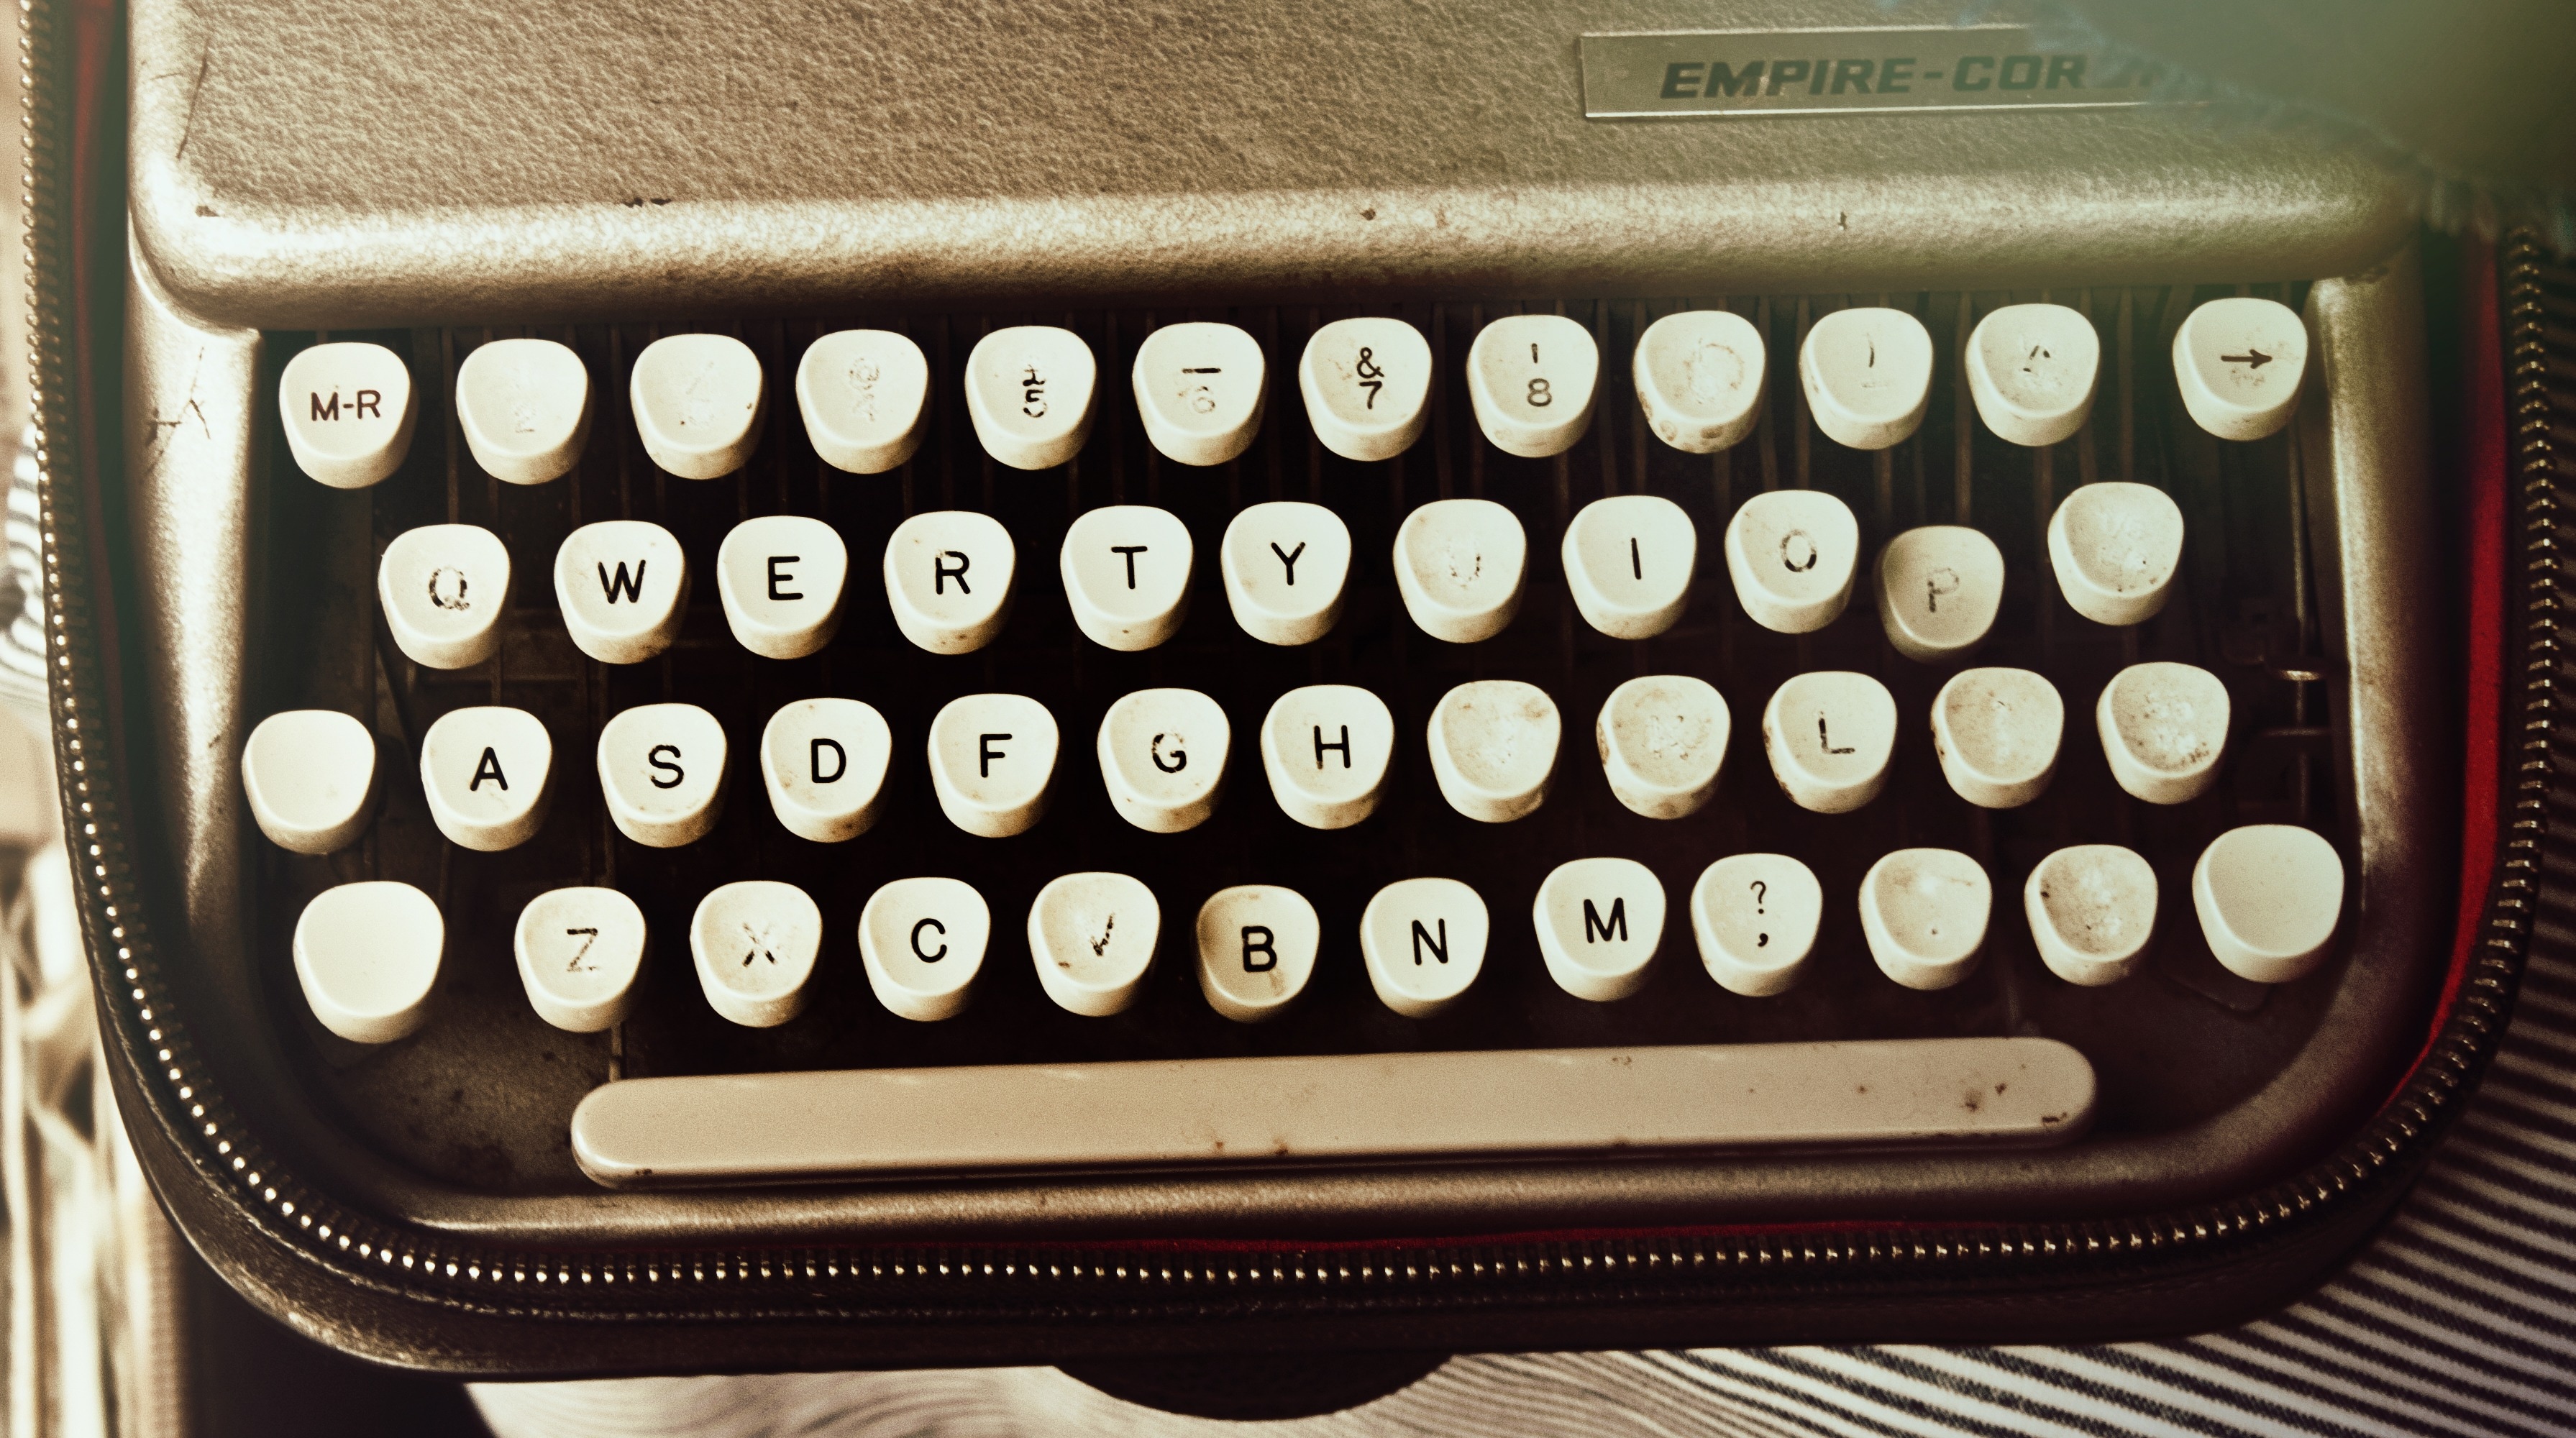 gray empire cor typewriter